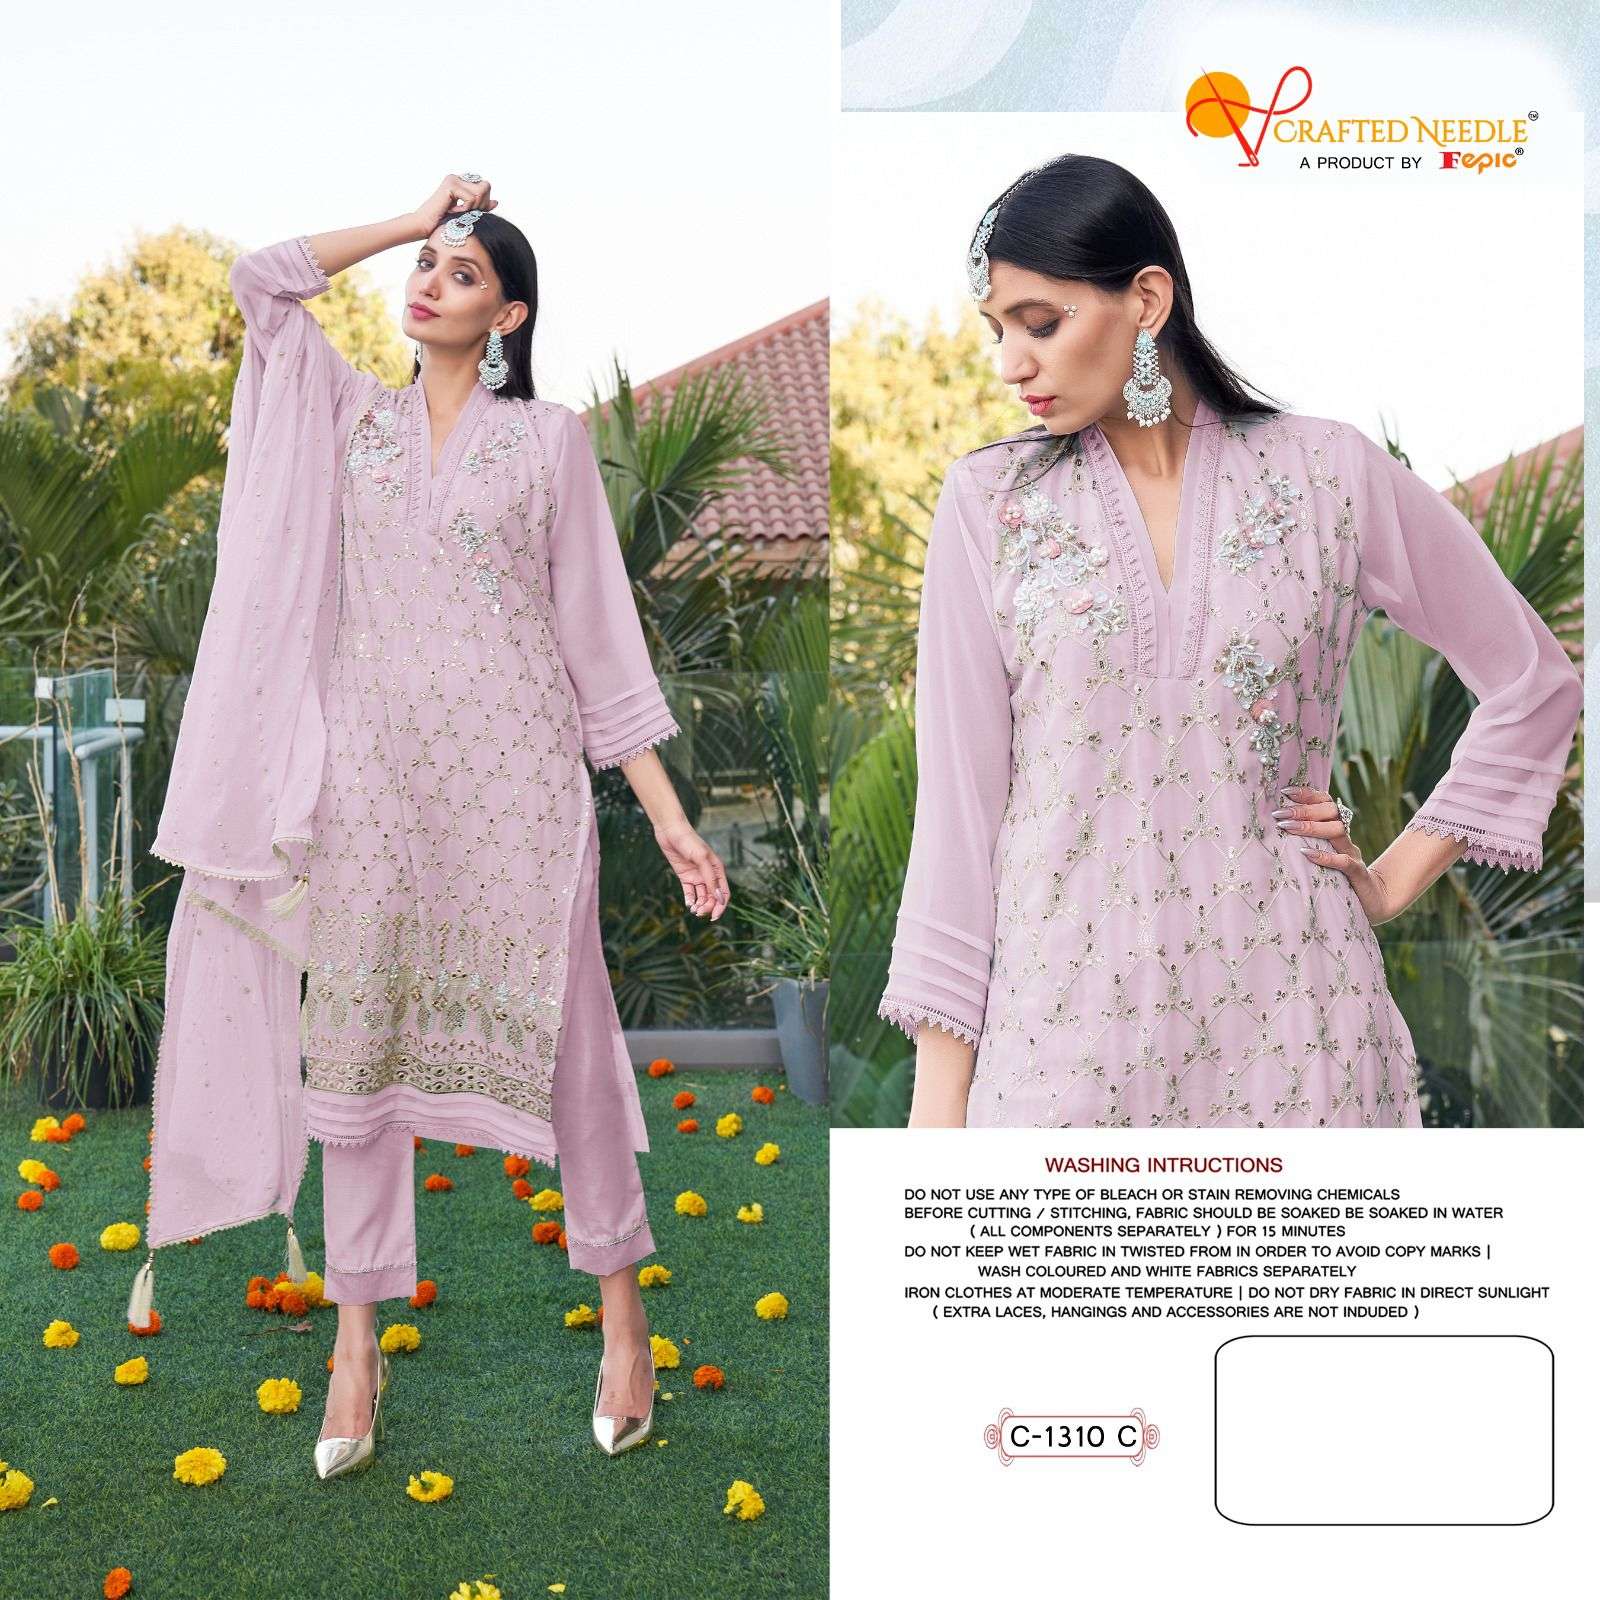 fepic 1310 series bridal look designer pakistani salwar suits wholesale price surat 